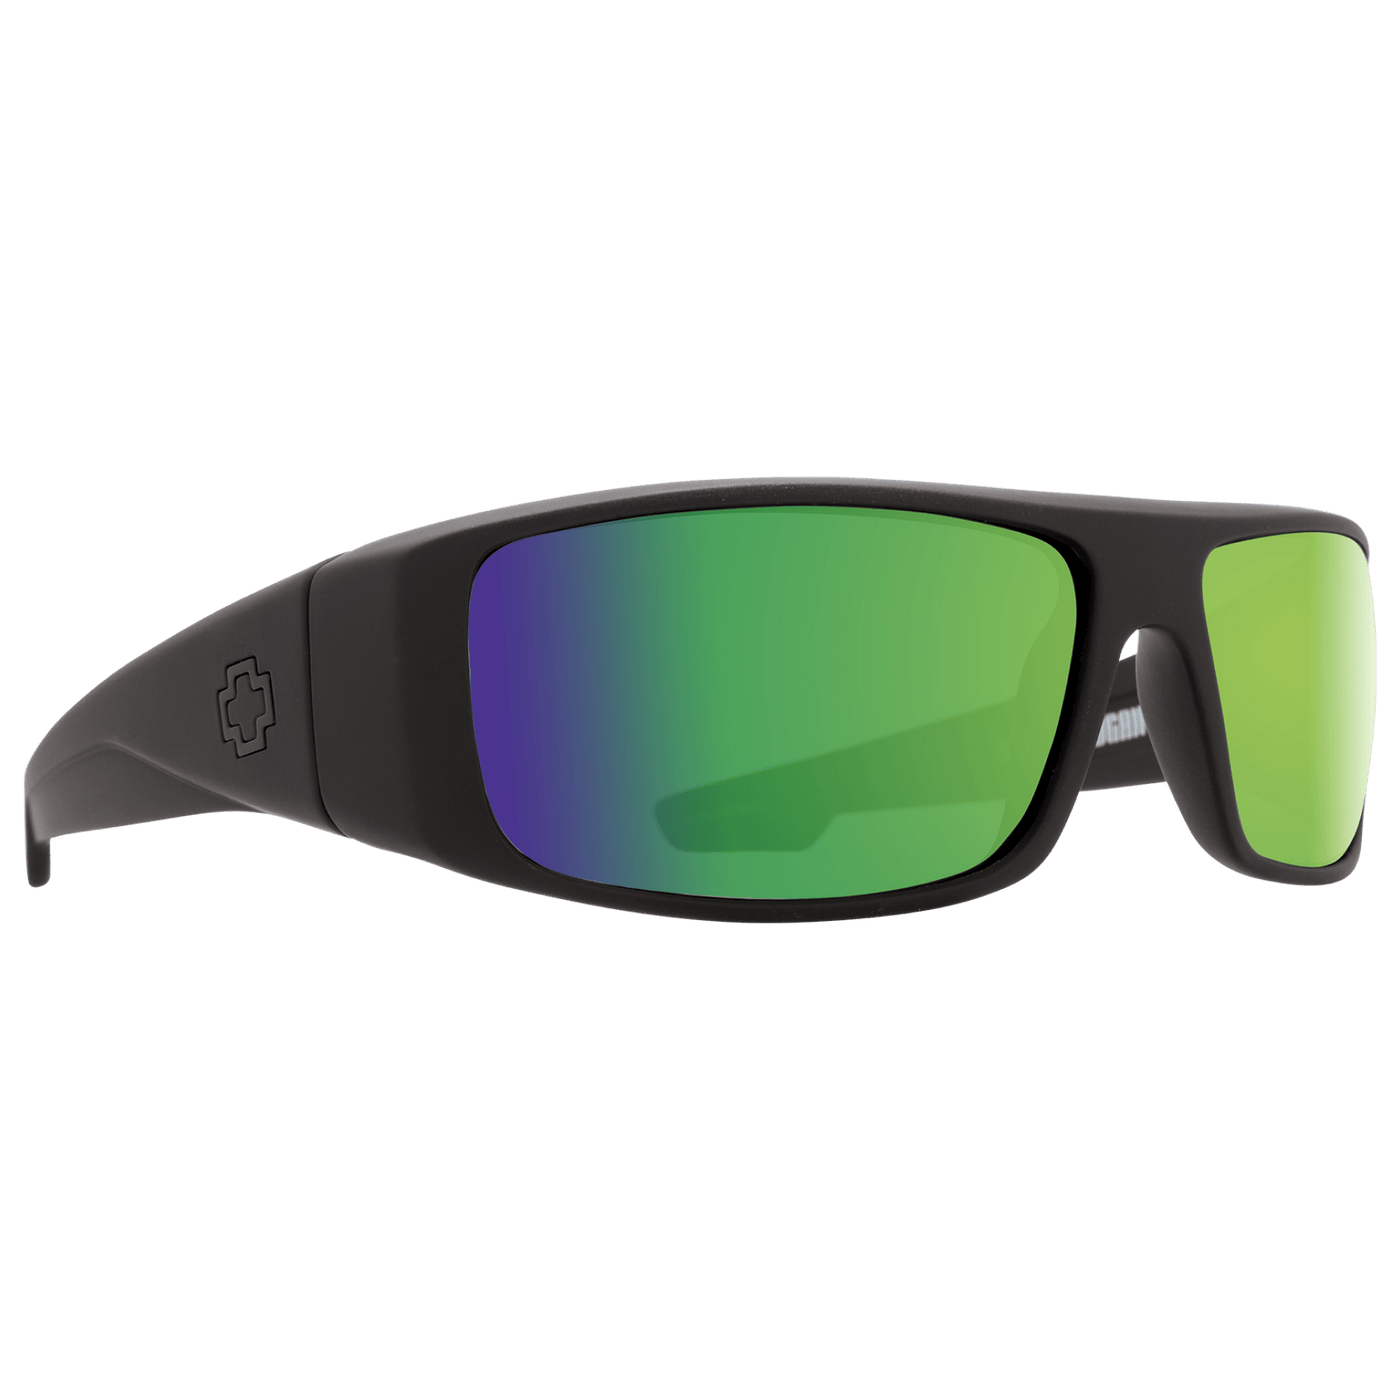 SPY LOGAN Polarized Sunglasses, Happy Lens - Green 8Lines Shop - Fast Shipping